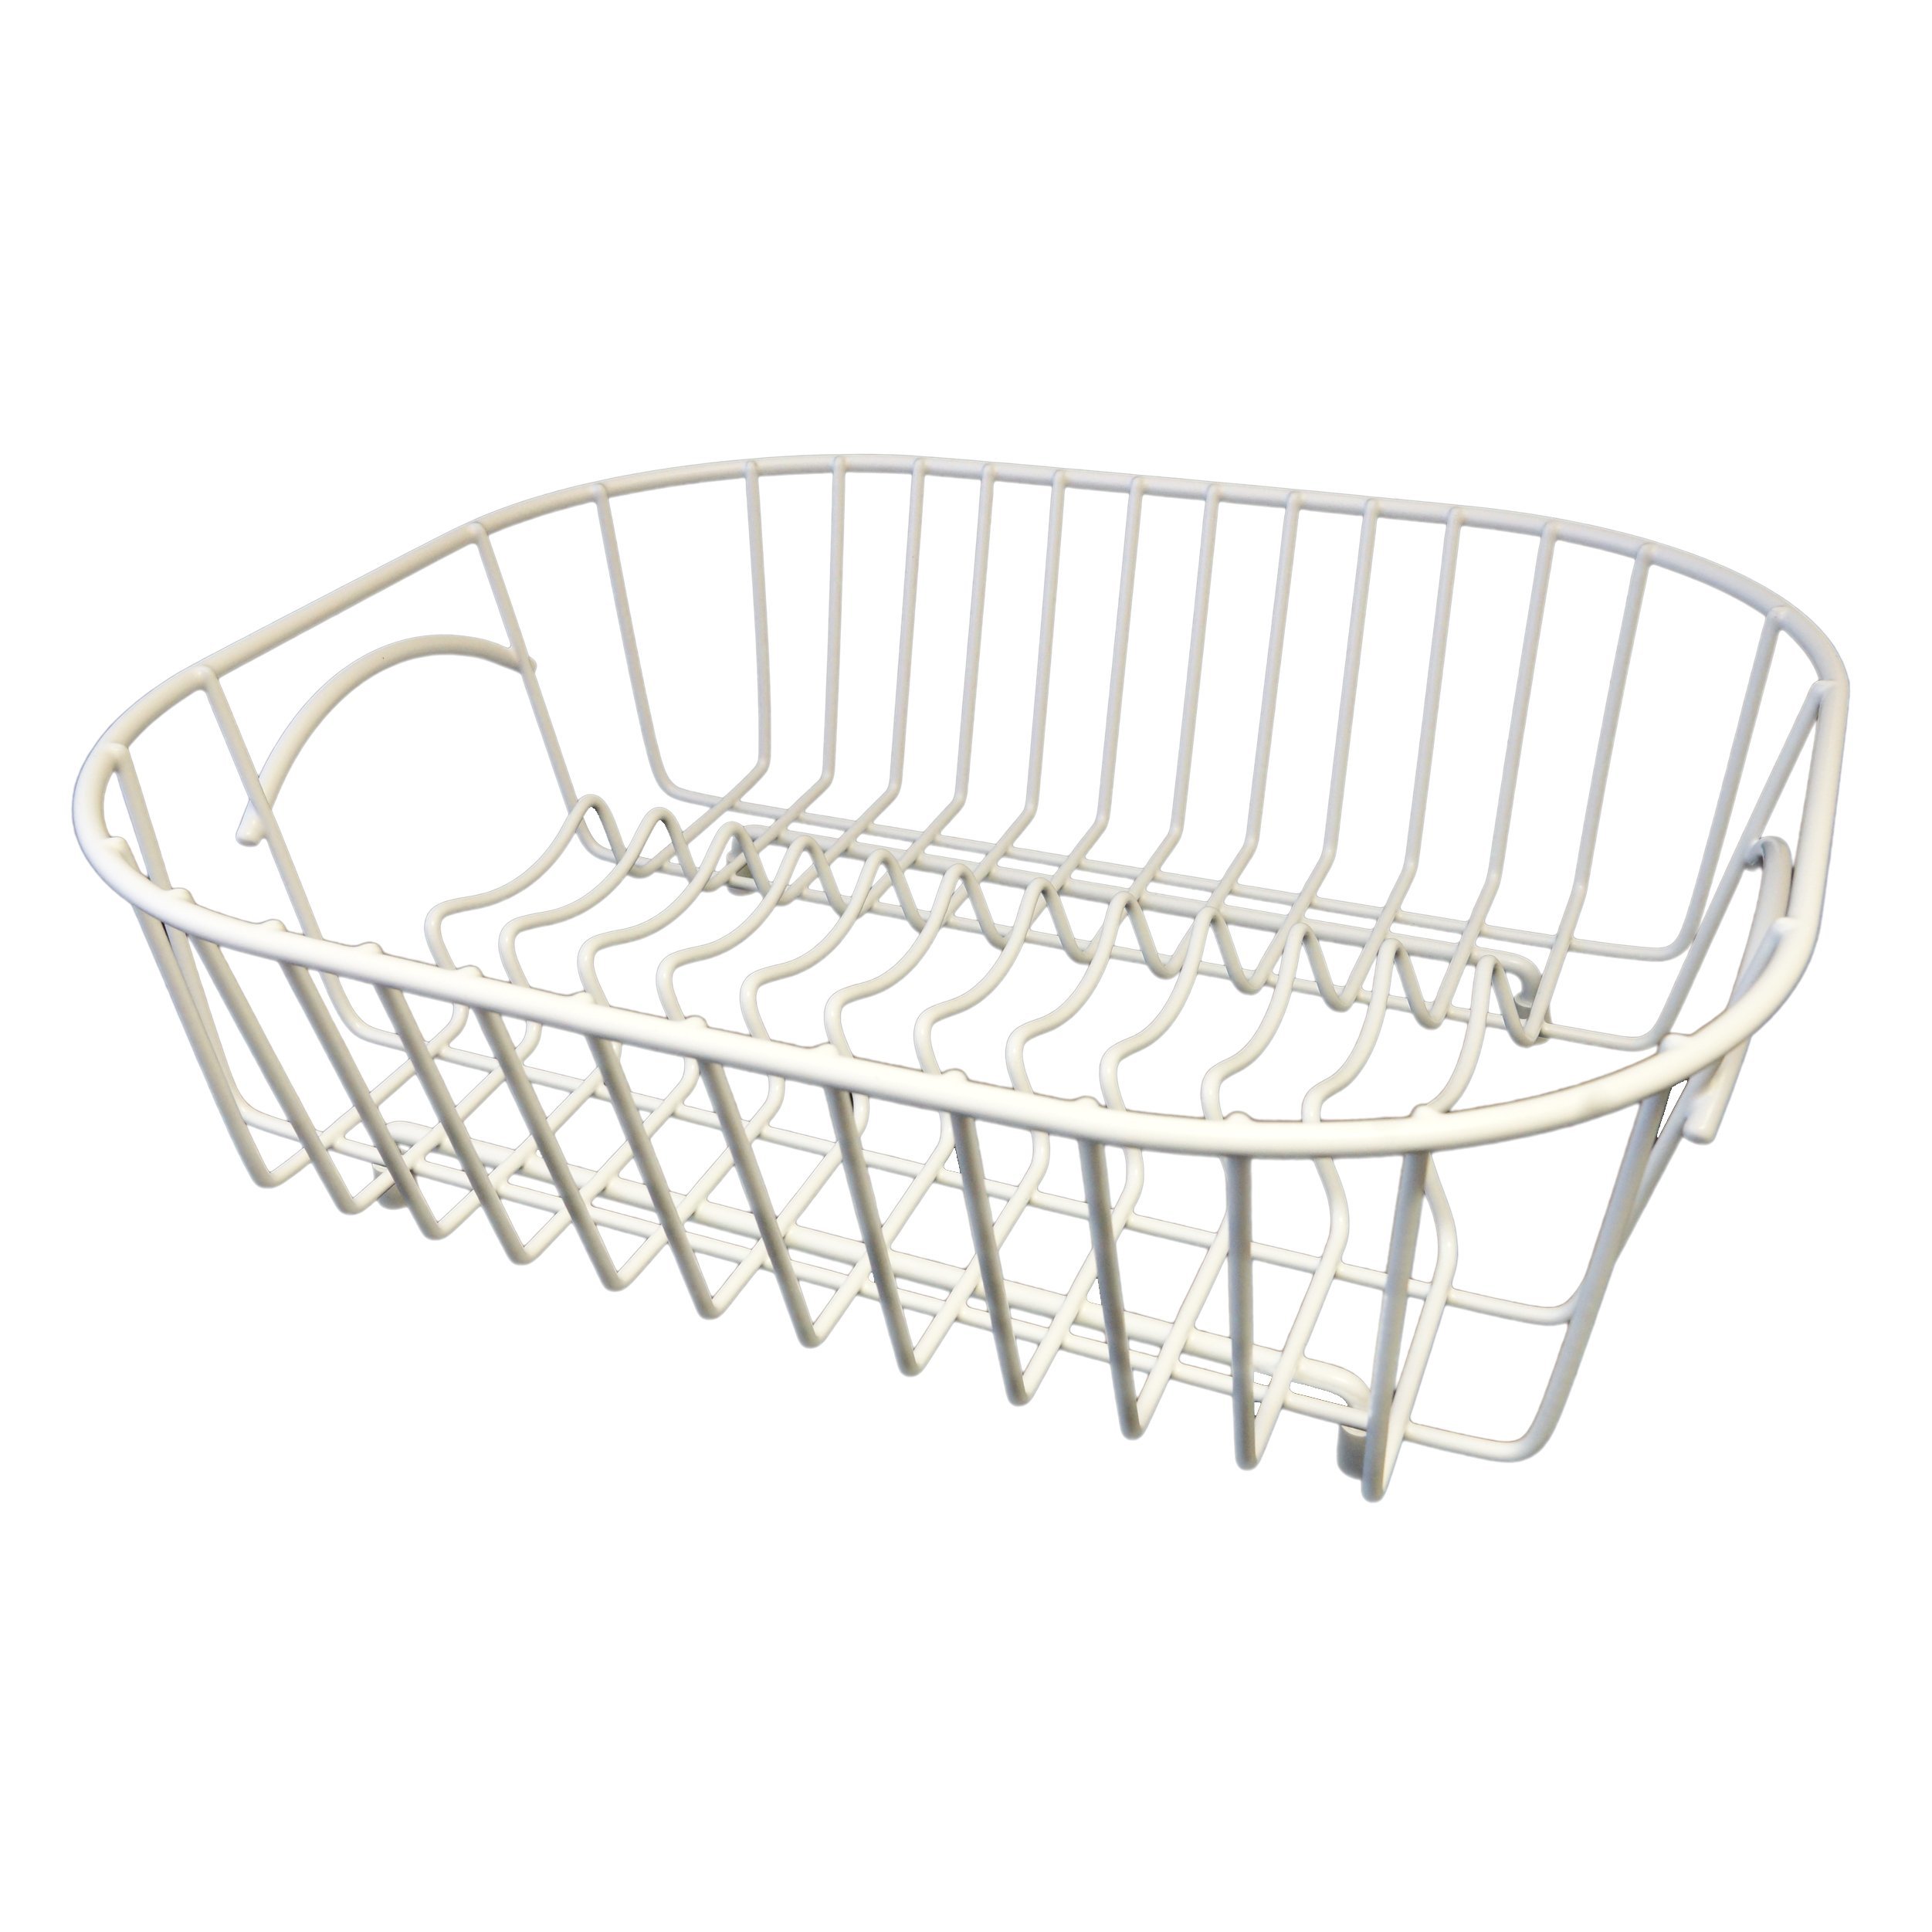 Delfinware Plate Sink Basket, White